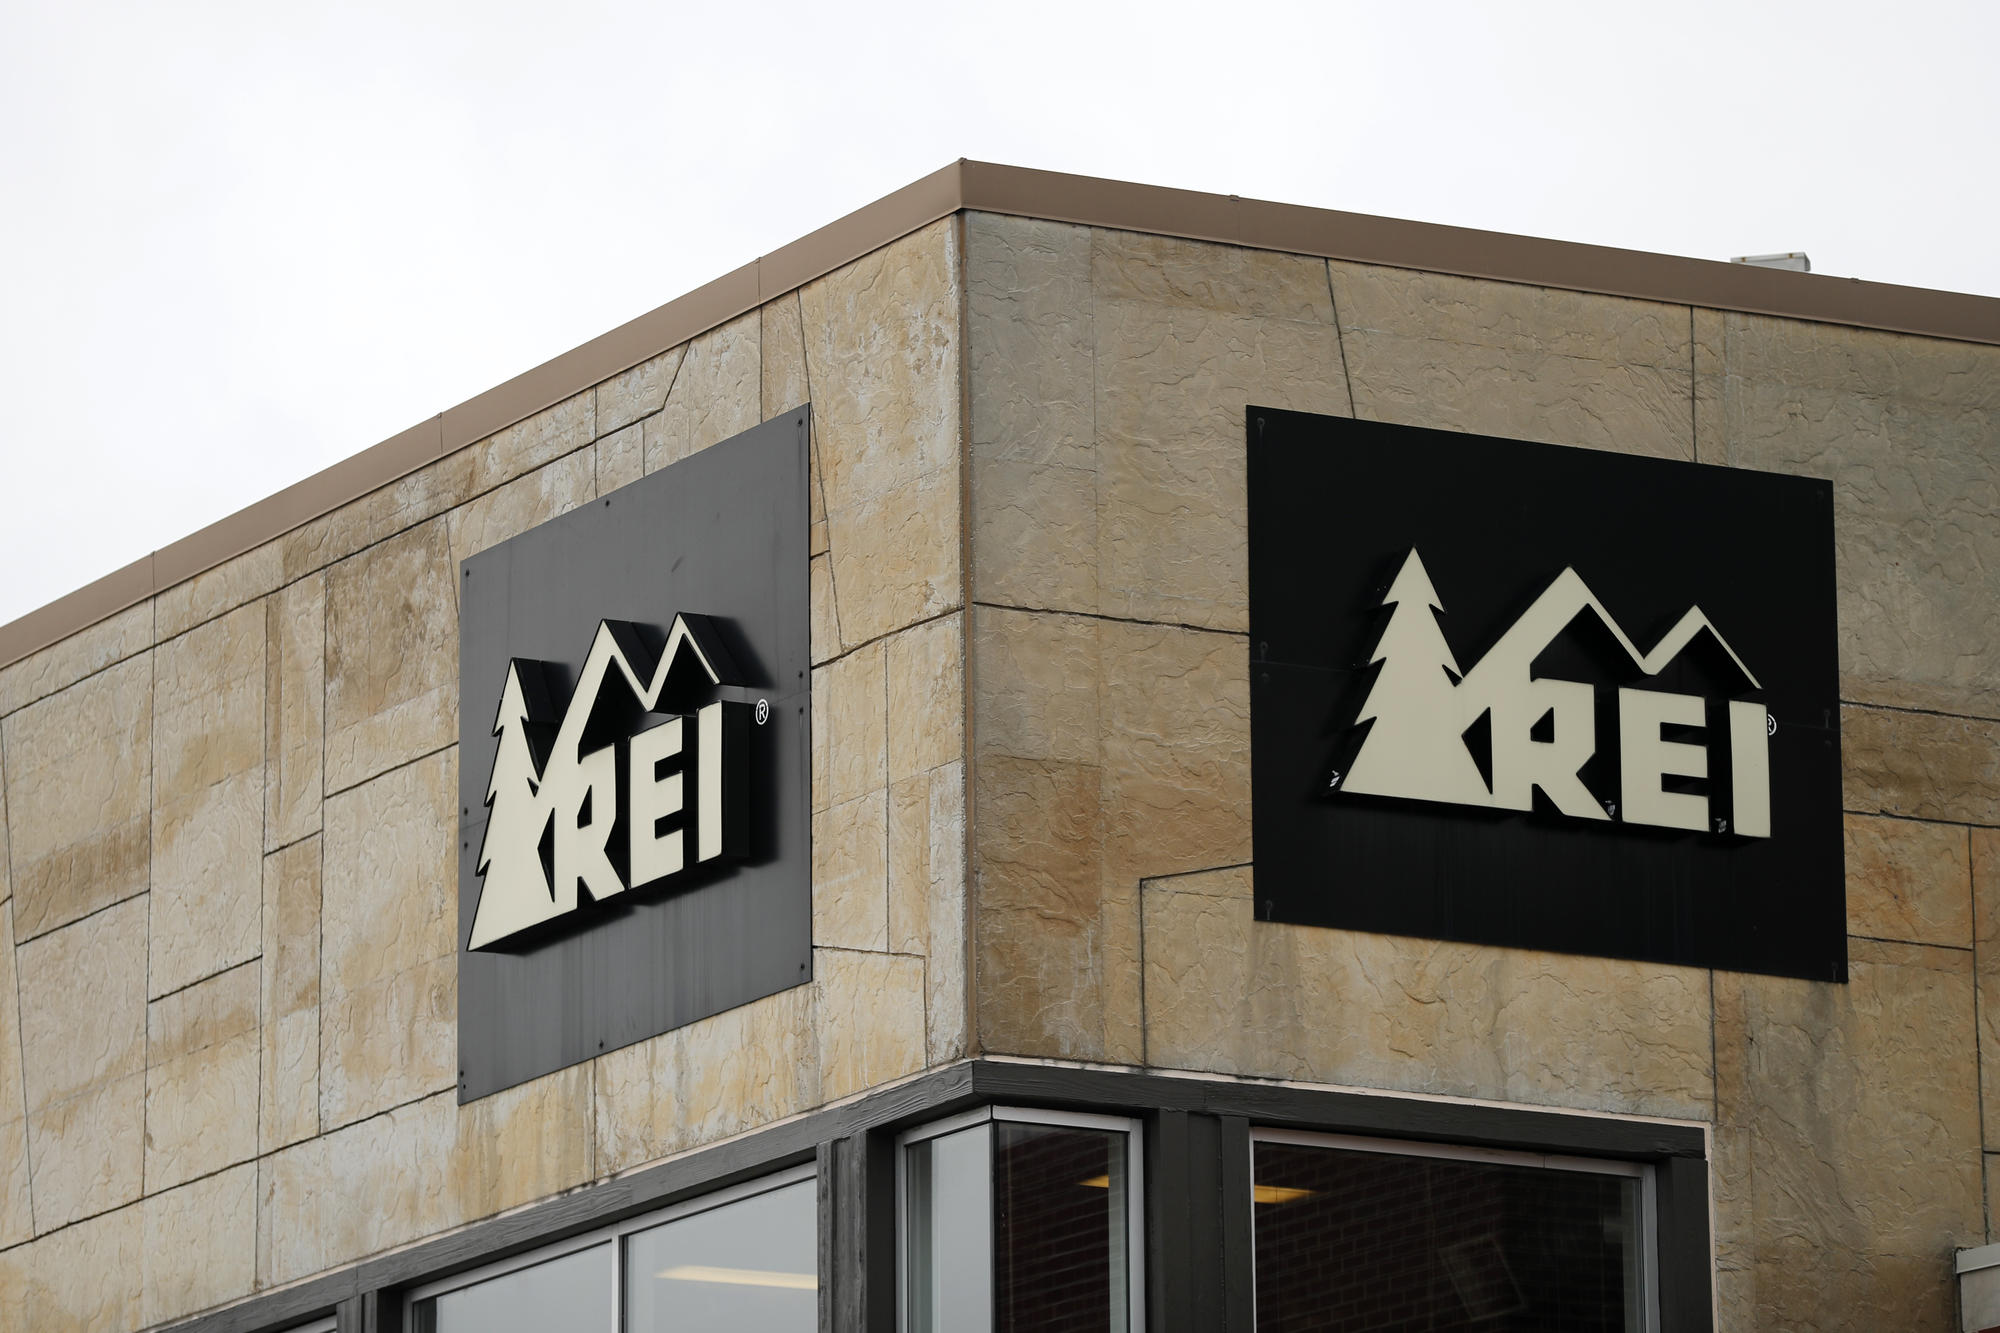 Seattle-based outdoor retailer REI bans PFAs